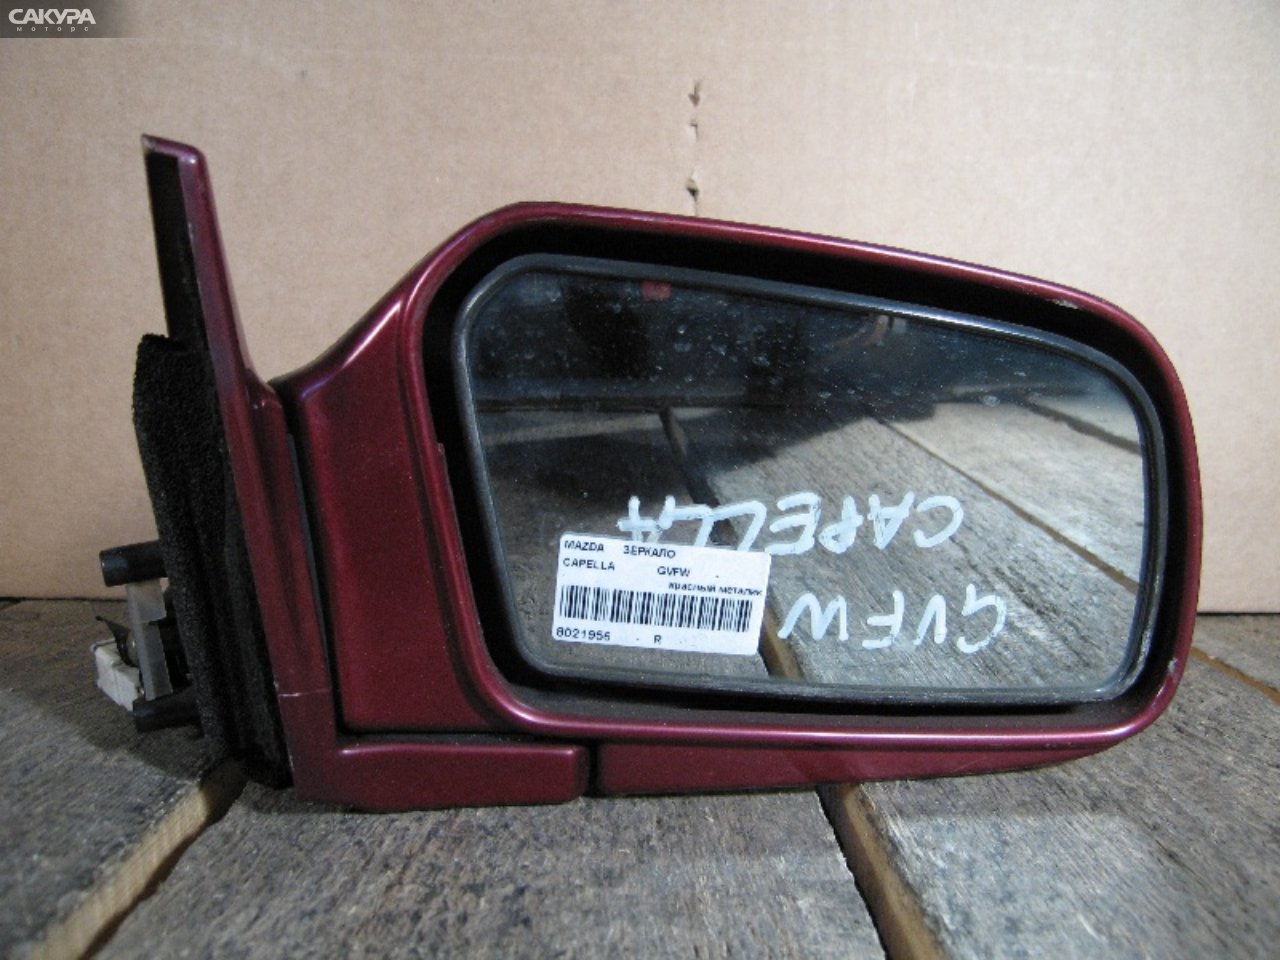 Зеркало боковое правое Mazda Capella GVFW: купить в Сакура Абакан.